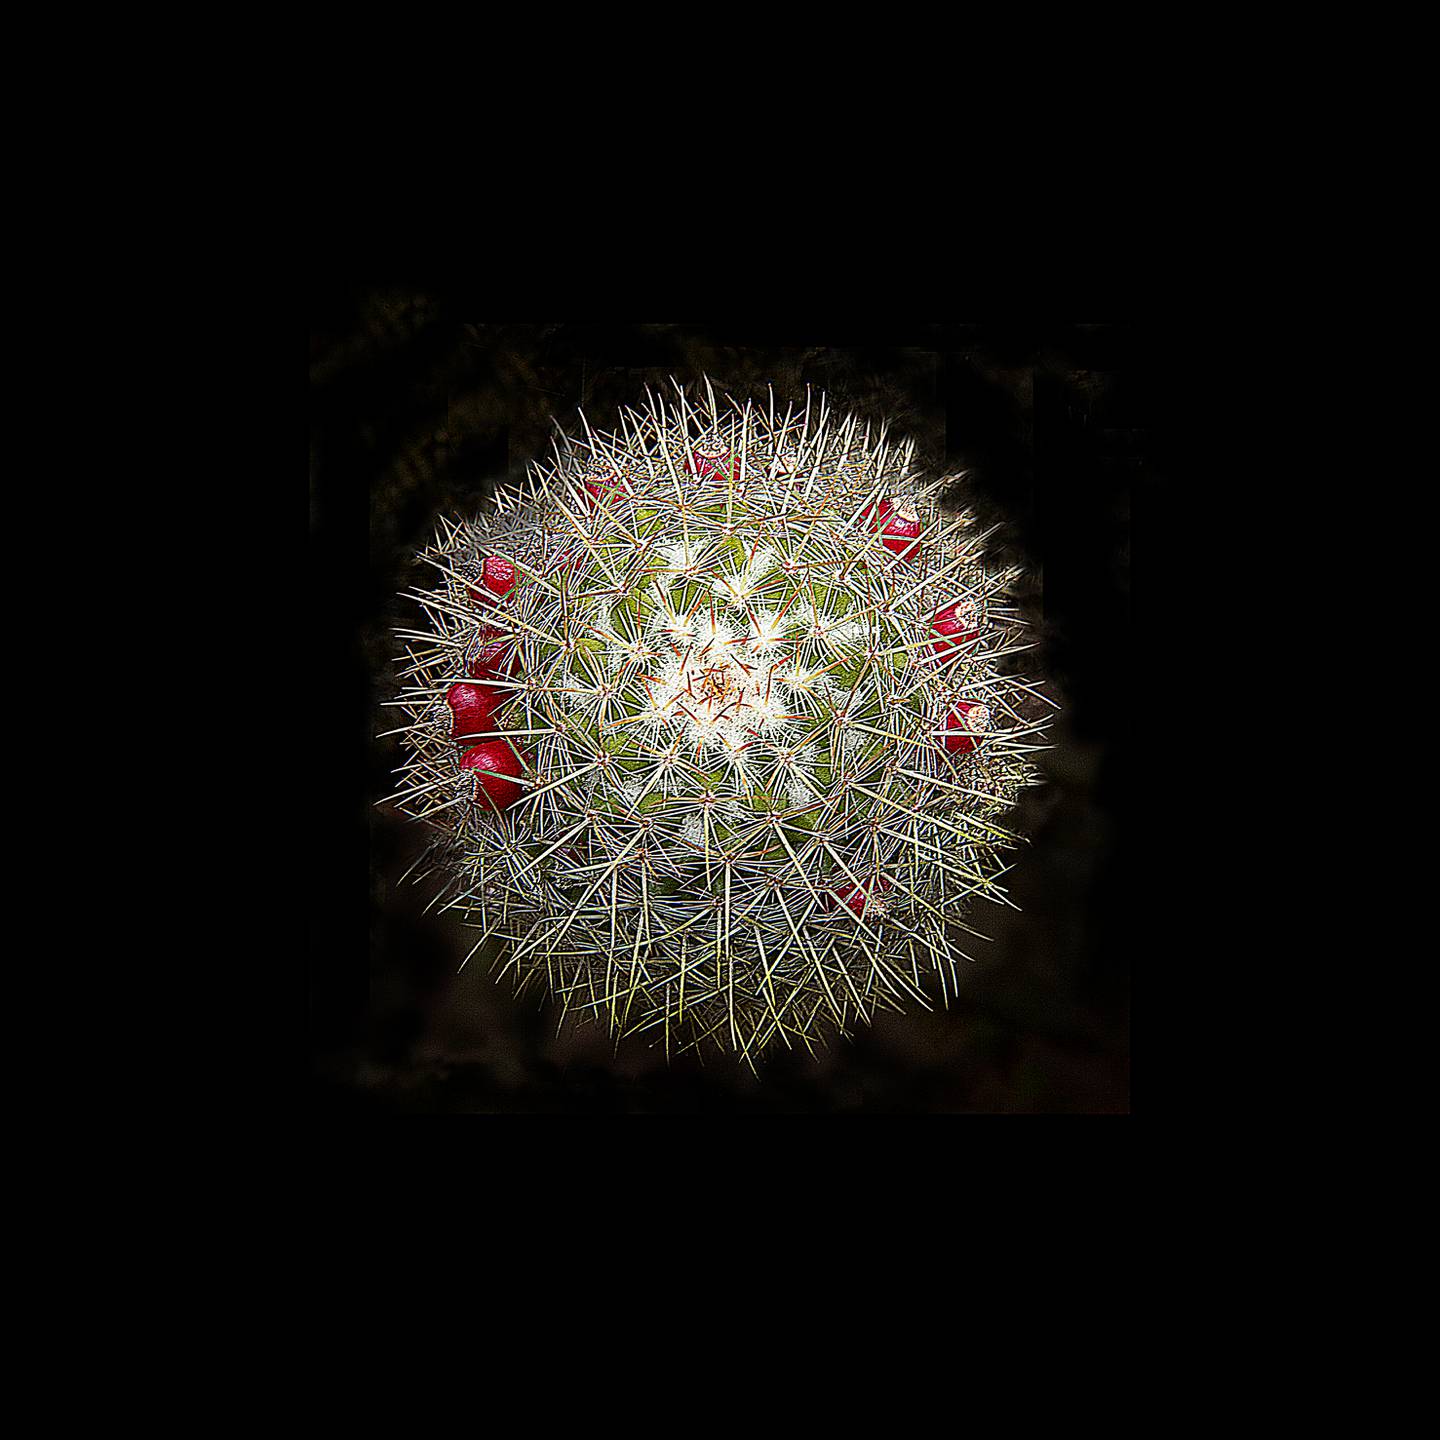 Cactus, fotografía de Abdu Eljaiek